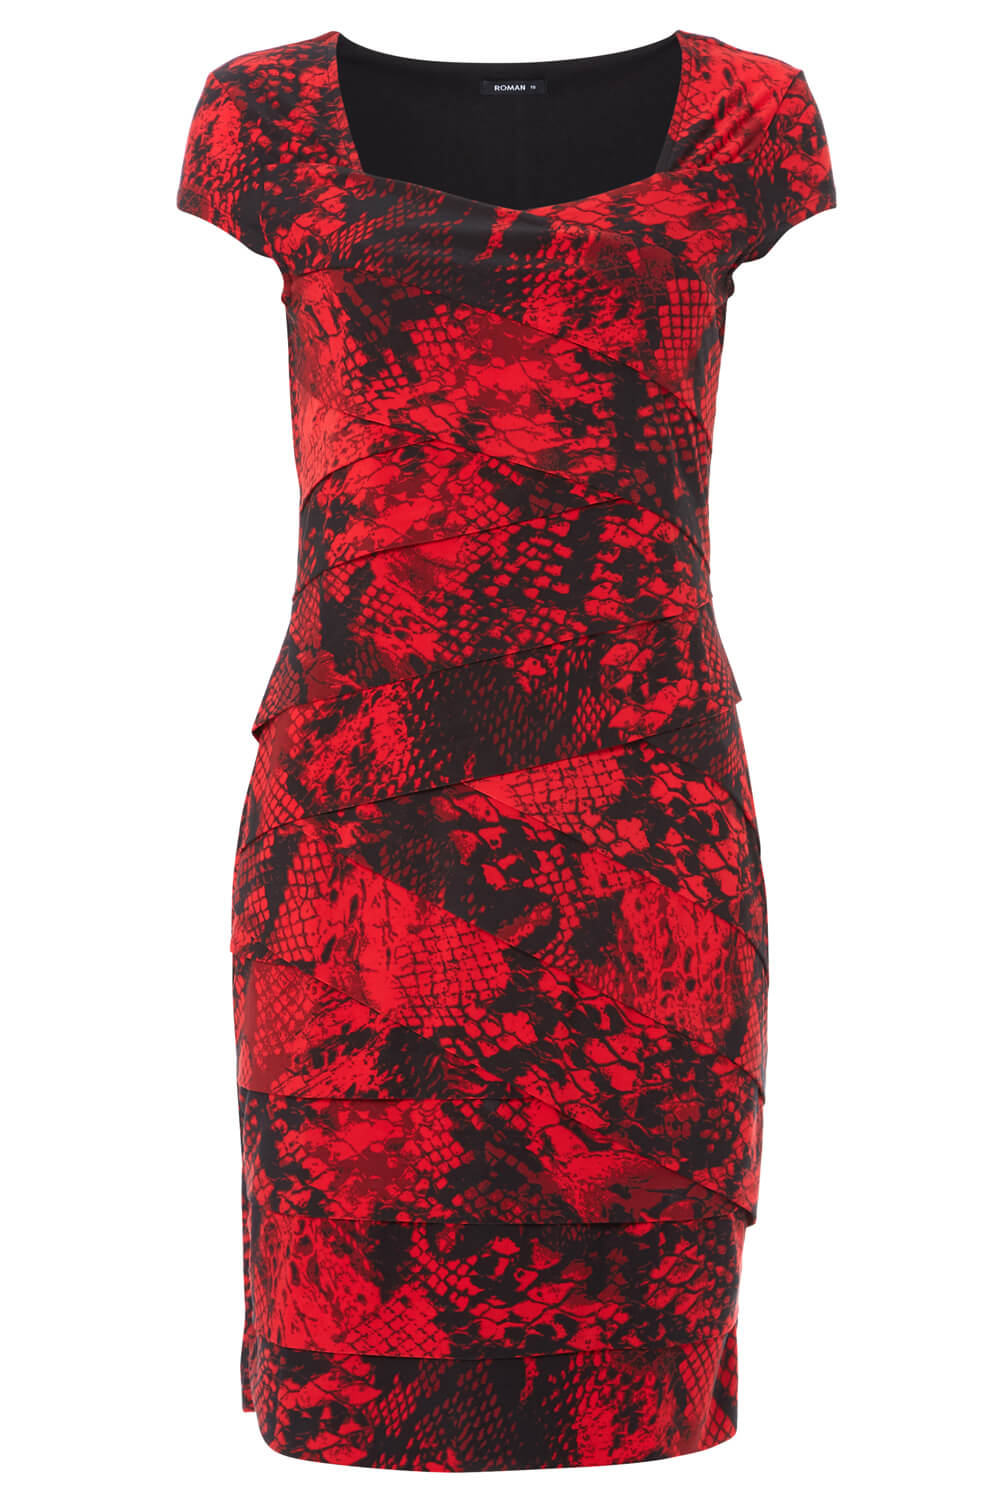 Red Snake Print Shutter Pleat Dress, Image 5 of 5